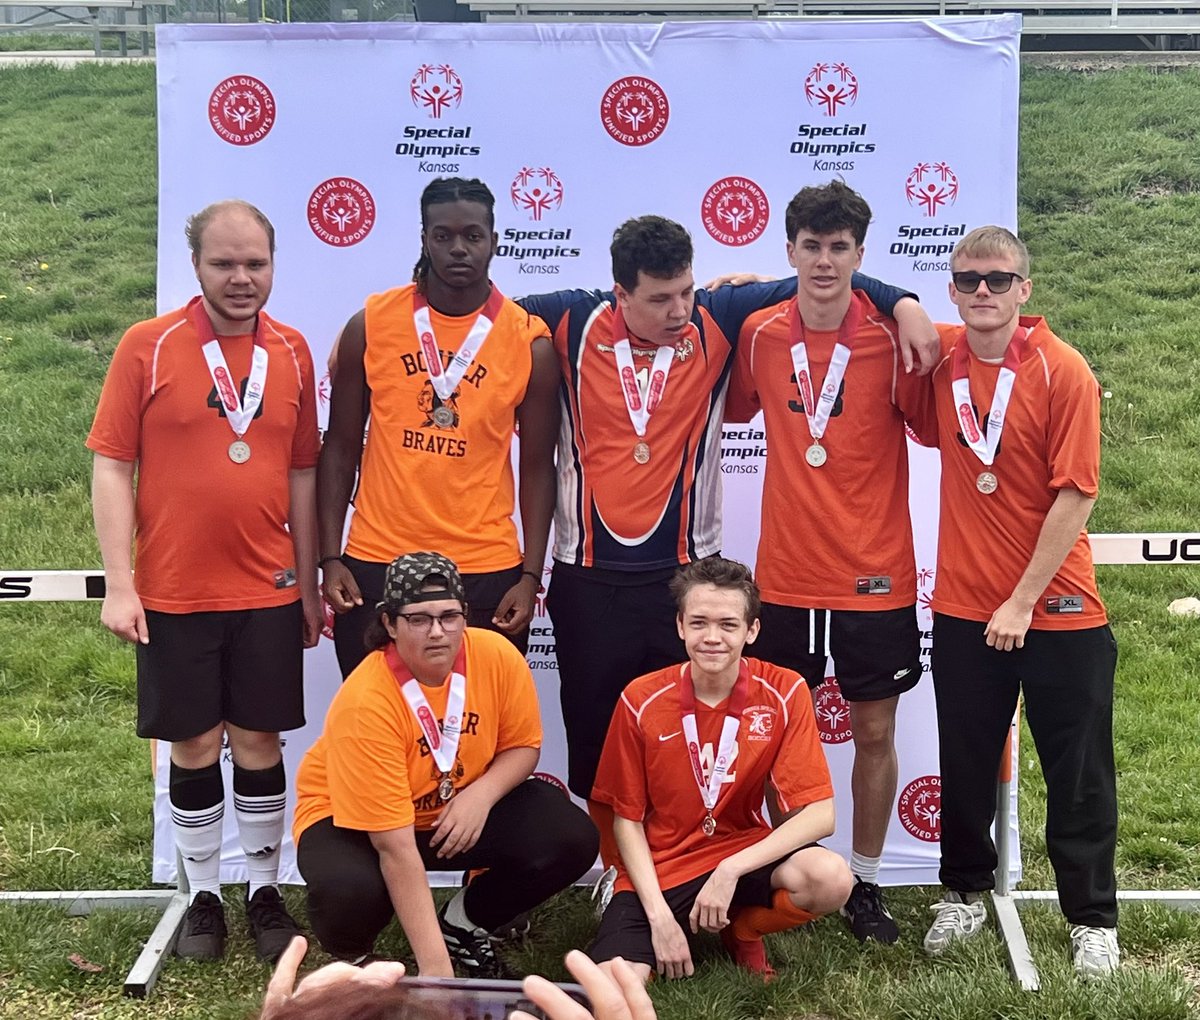 2nd place! 🥈 Congrats Orange Team! 🤩
#PlayUnified 
@sokansasunified
@sokansas 
@TeamBonner_SOKS